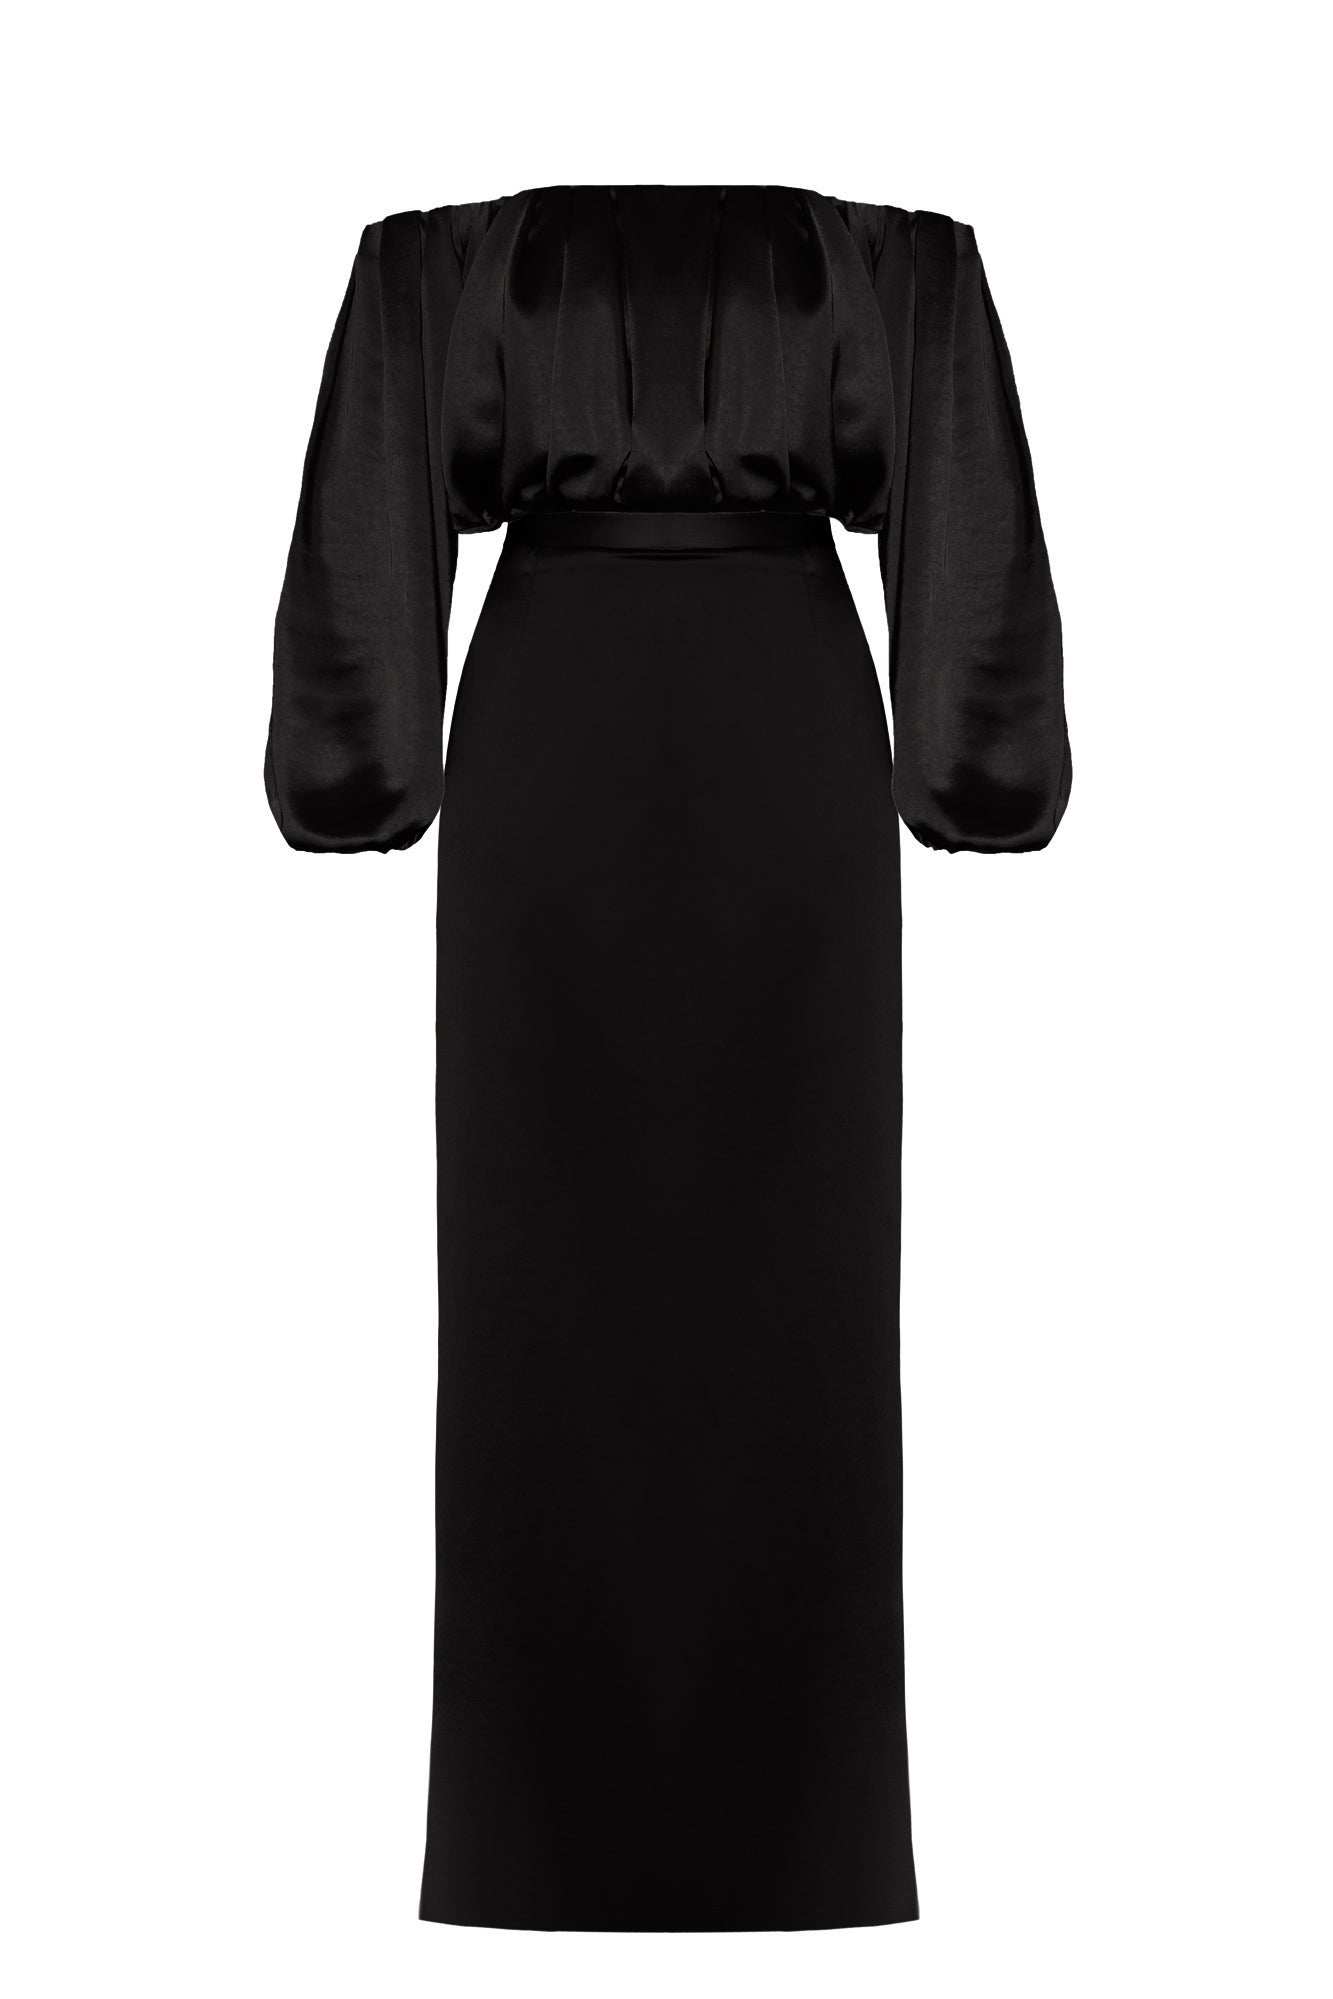 Black elegant handmade dress